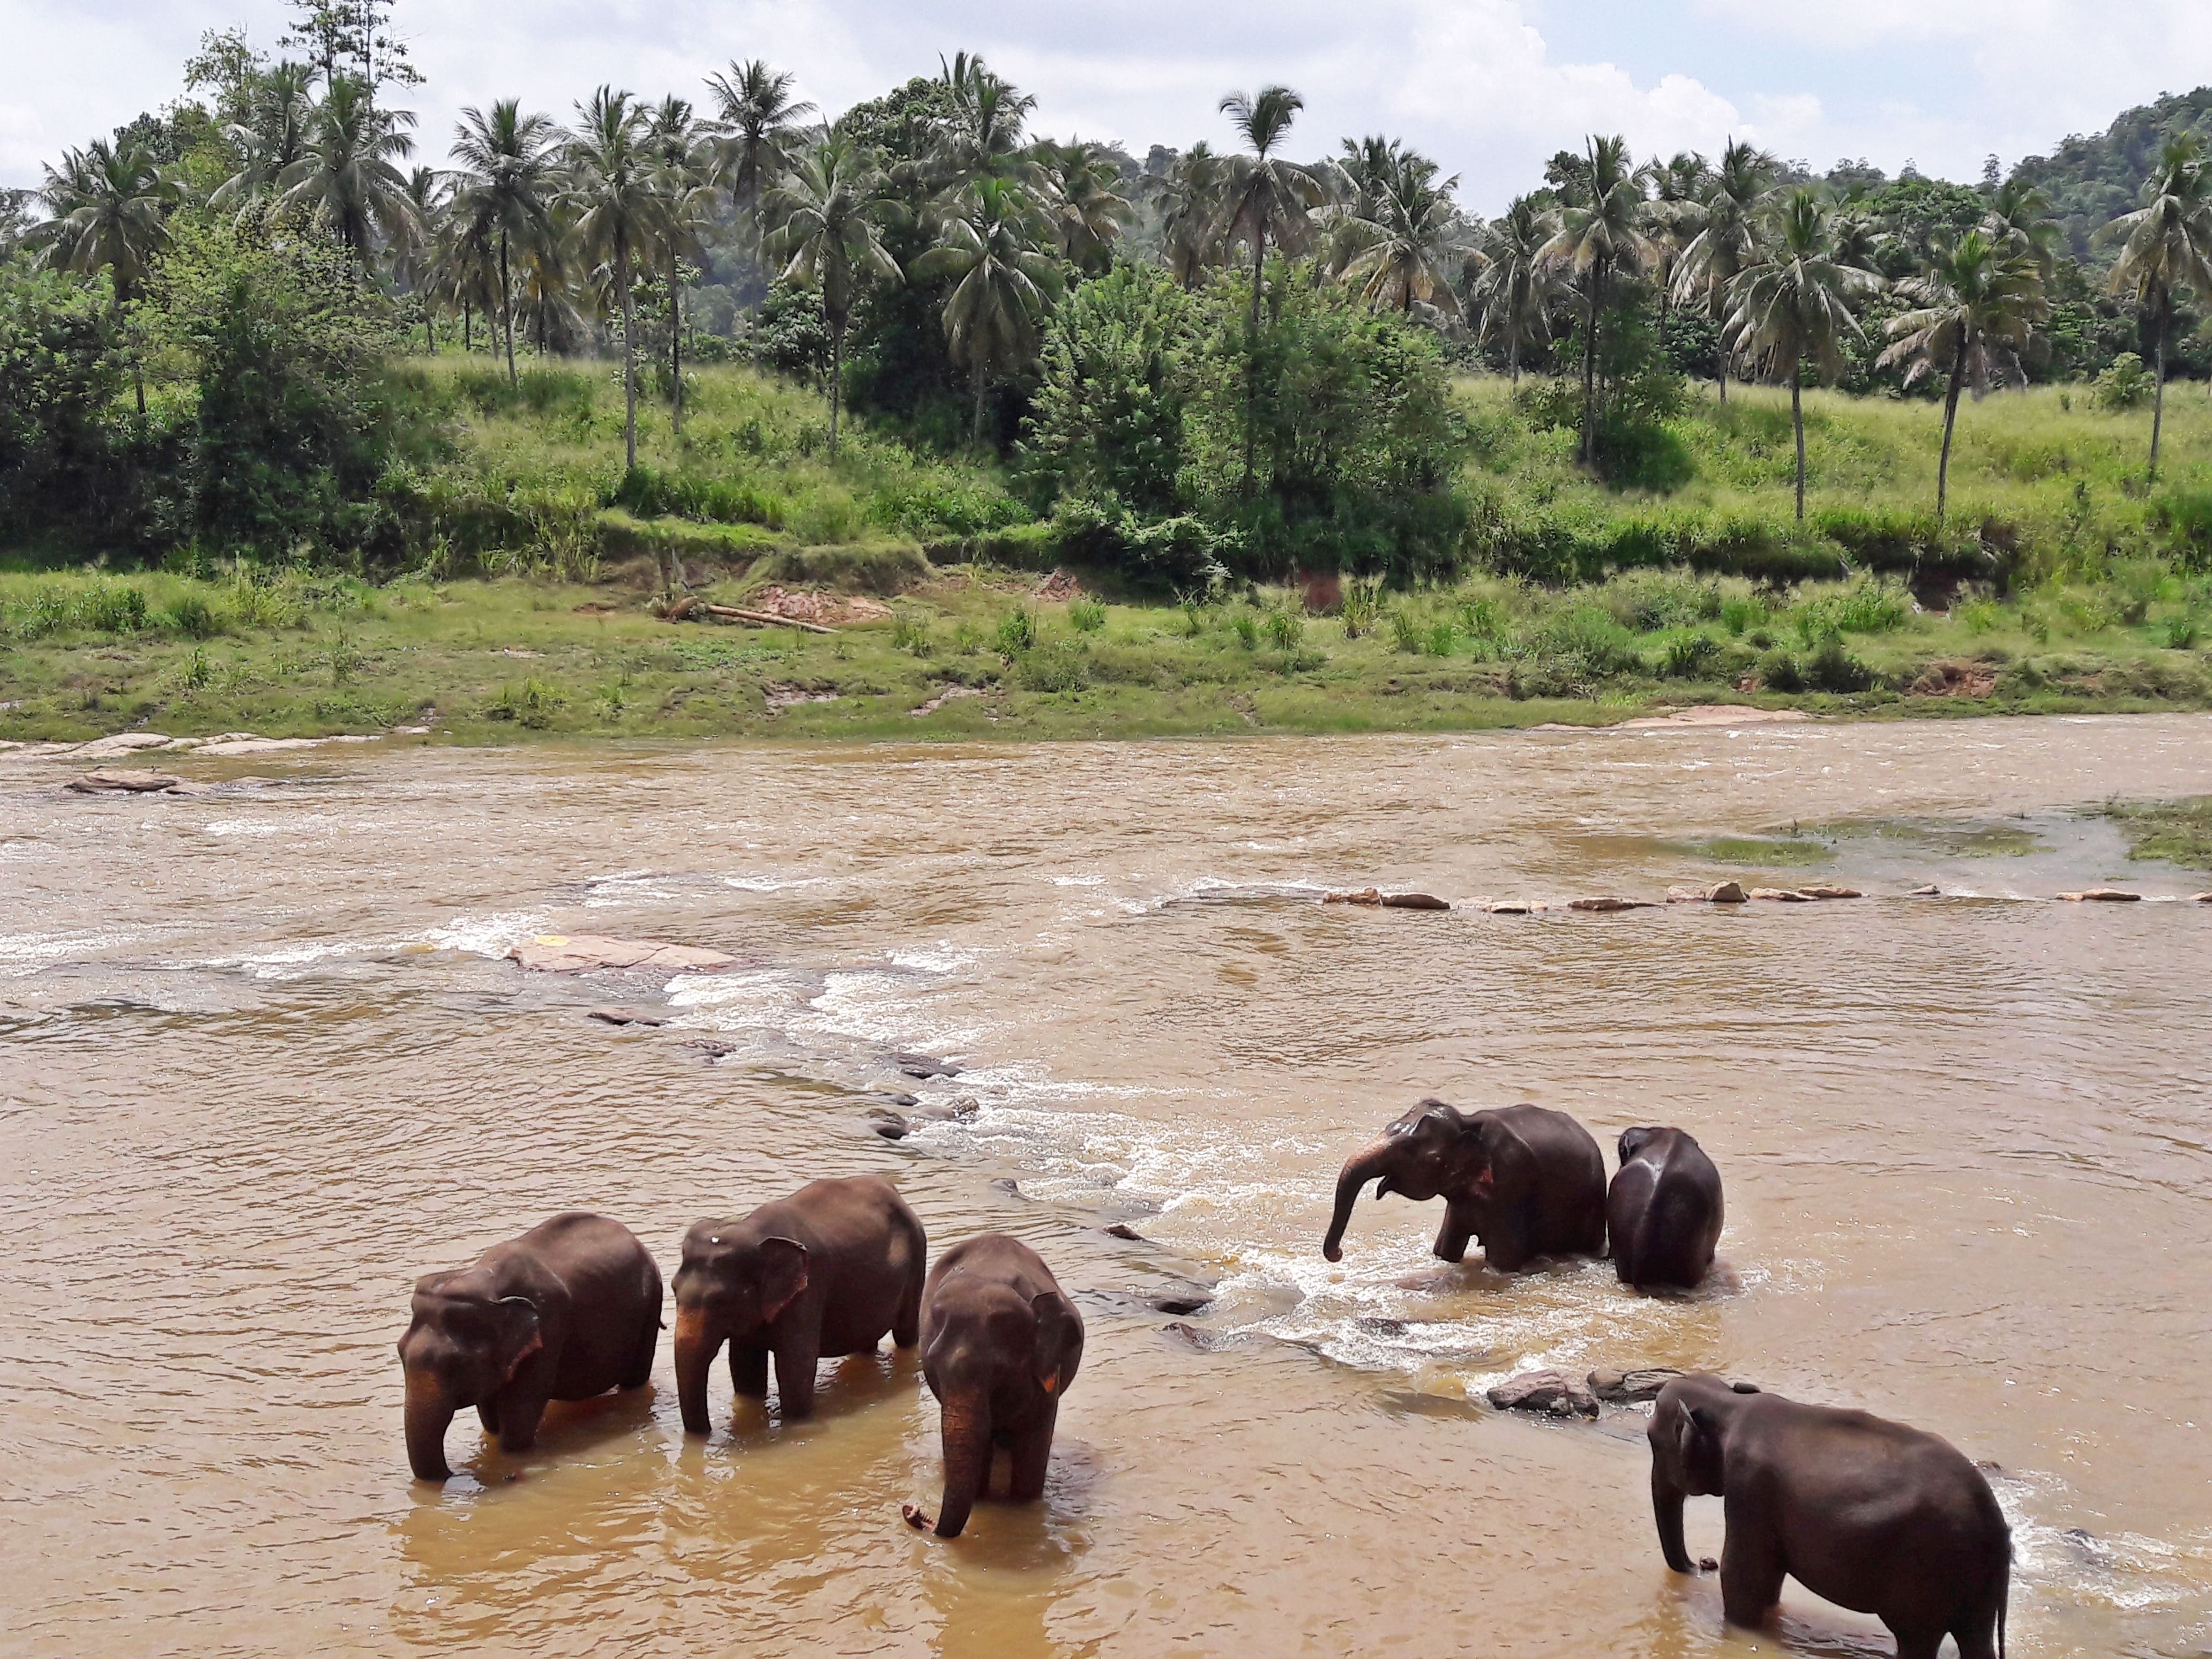 The elephants enjoying a nice bath in the river stream at Pinnawala